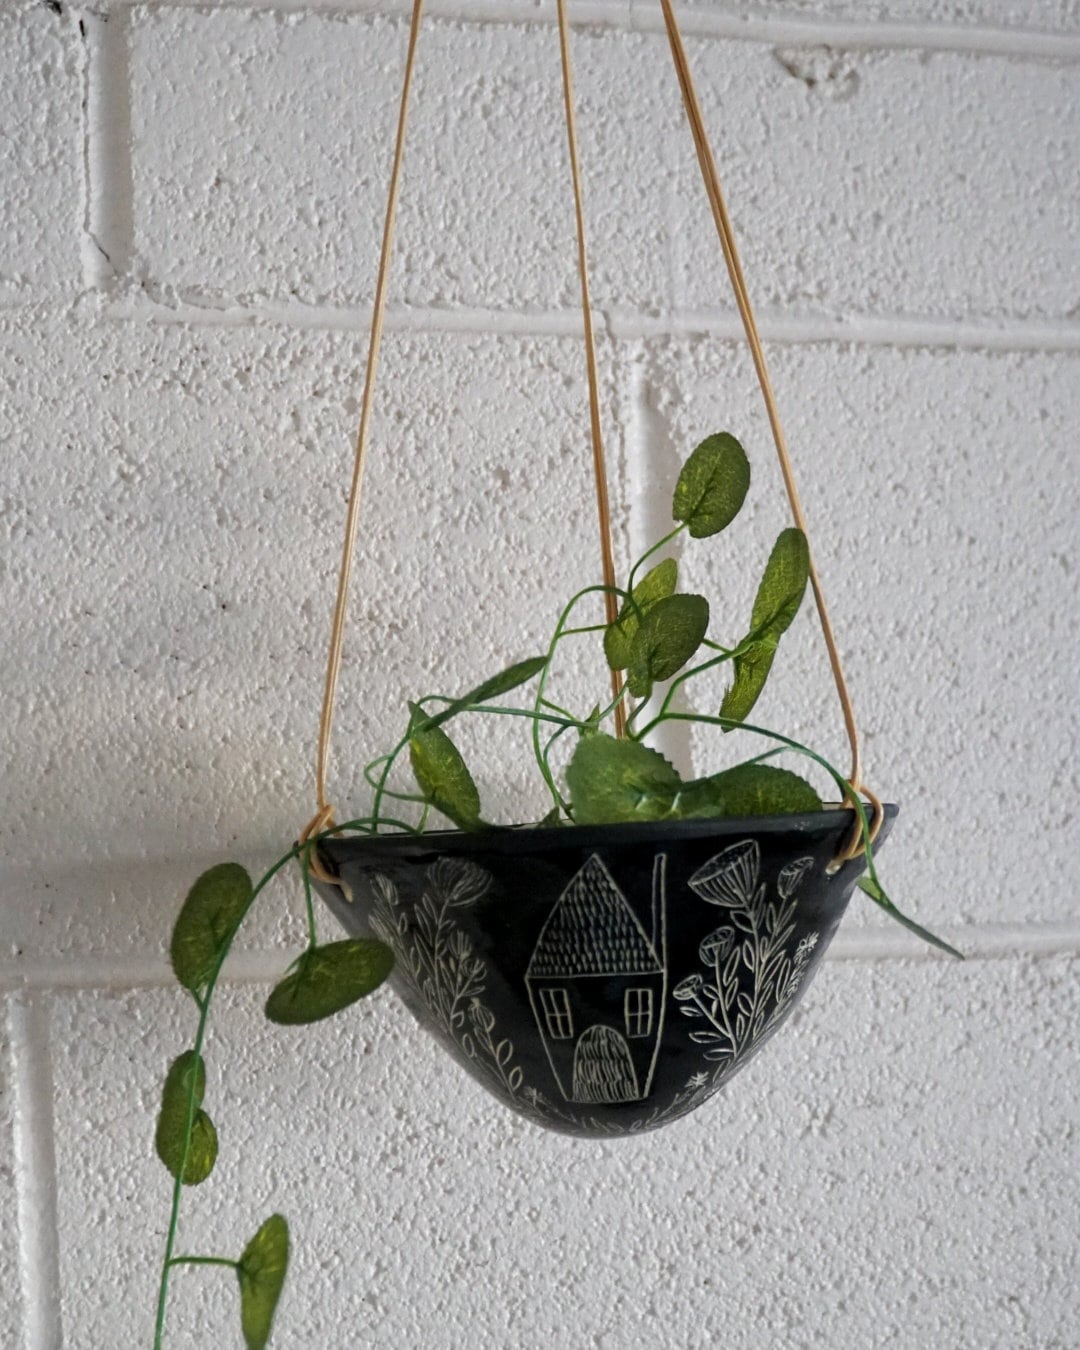 Black & White Glazed Hanging Planter w/ "Folk Home" Design - Hanging Pot with Carved Design - Glazed - Succulent, Cactus, Herb, Air Plant